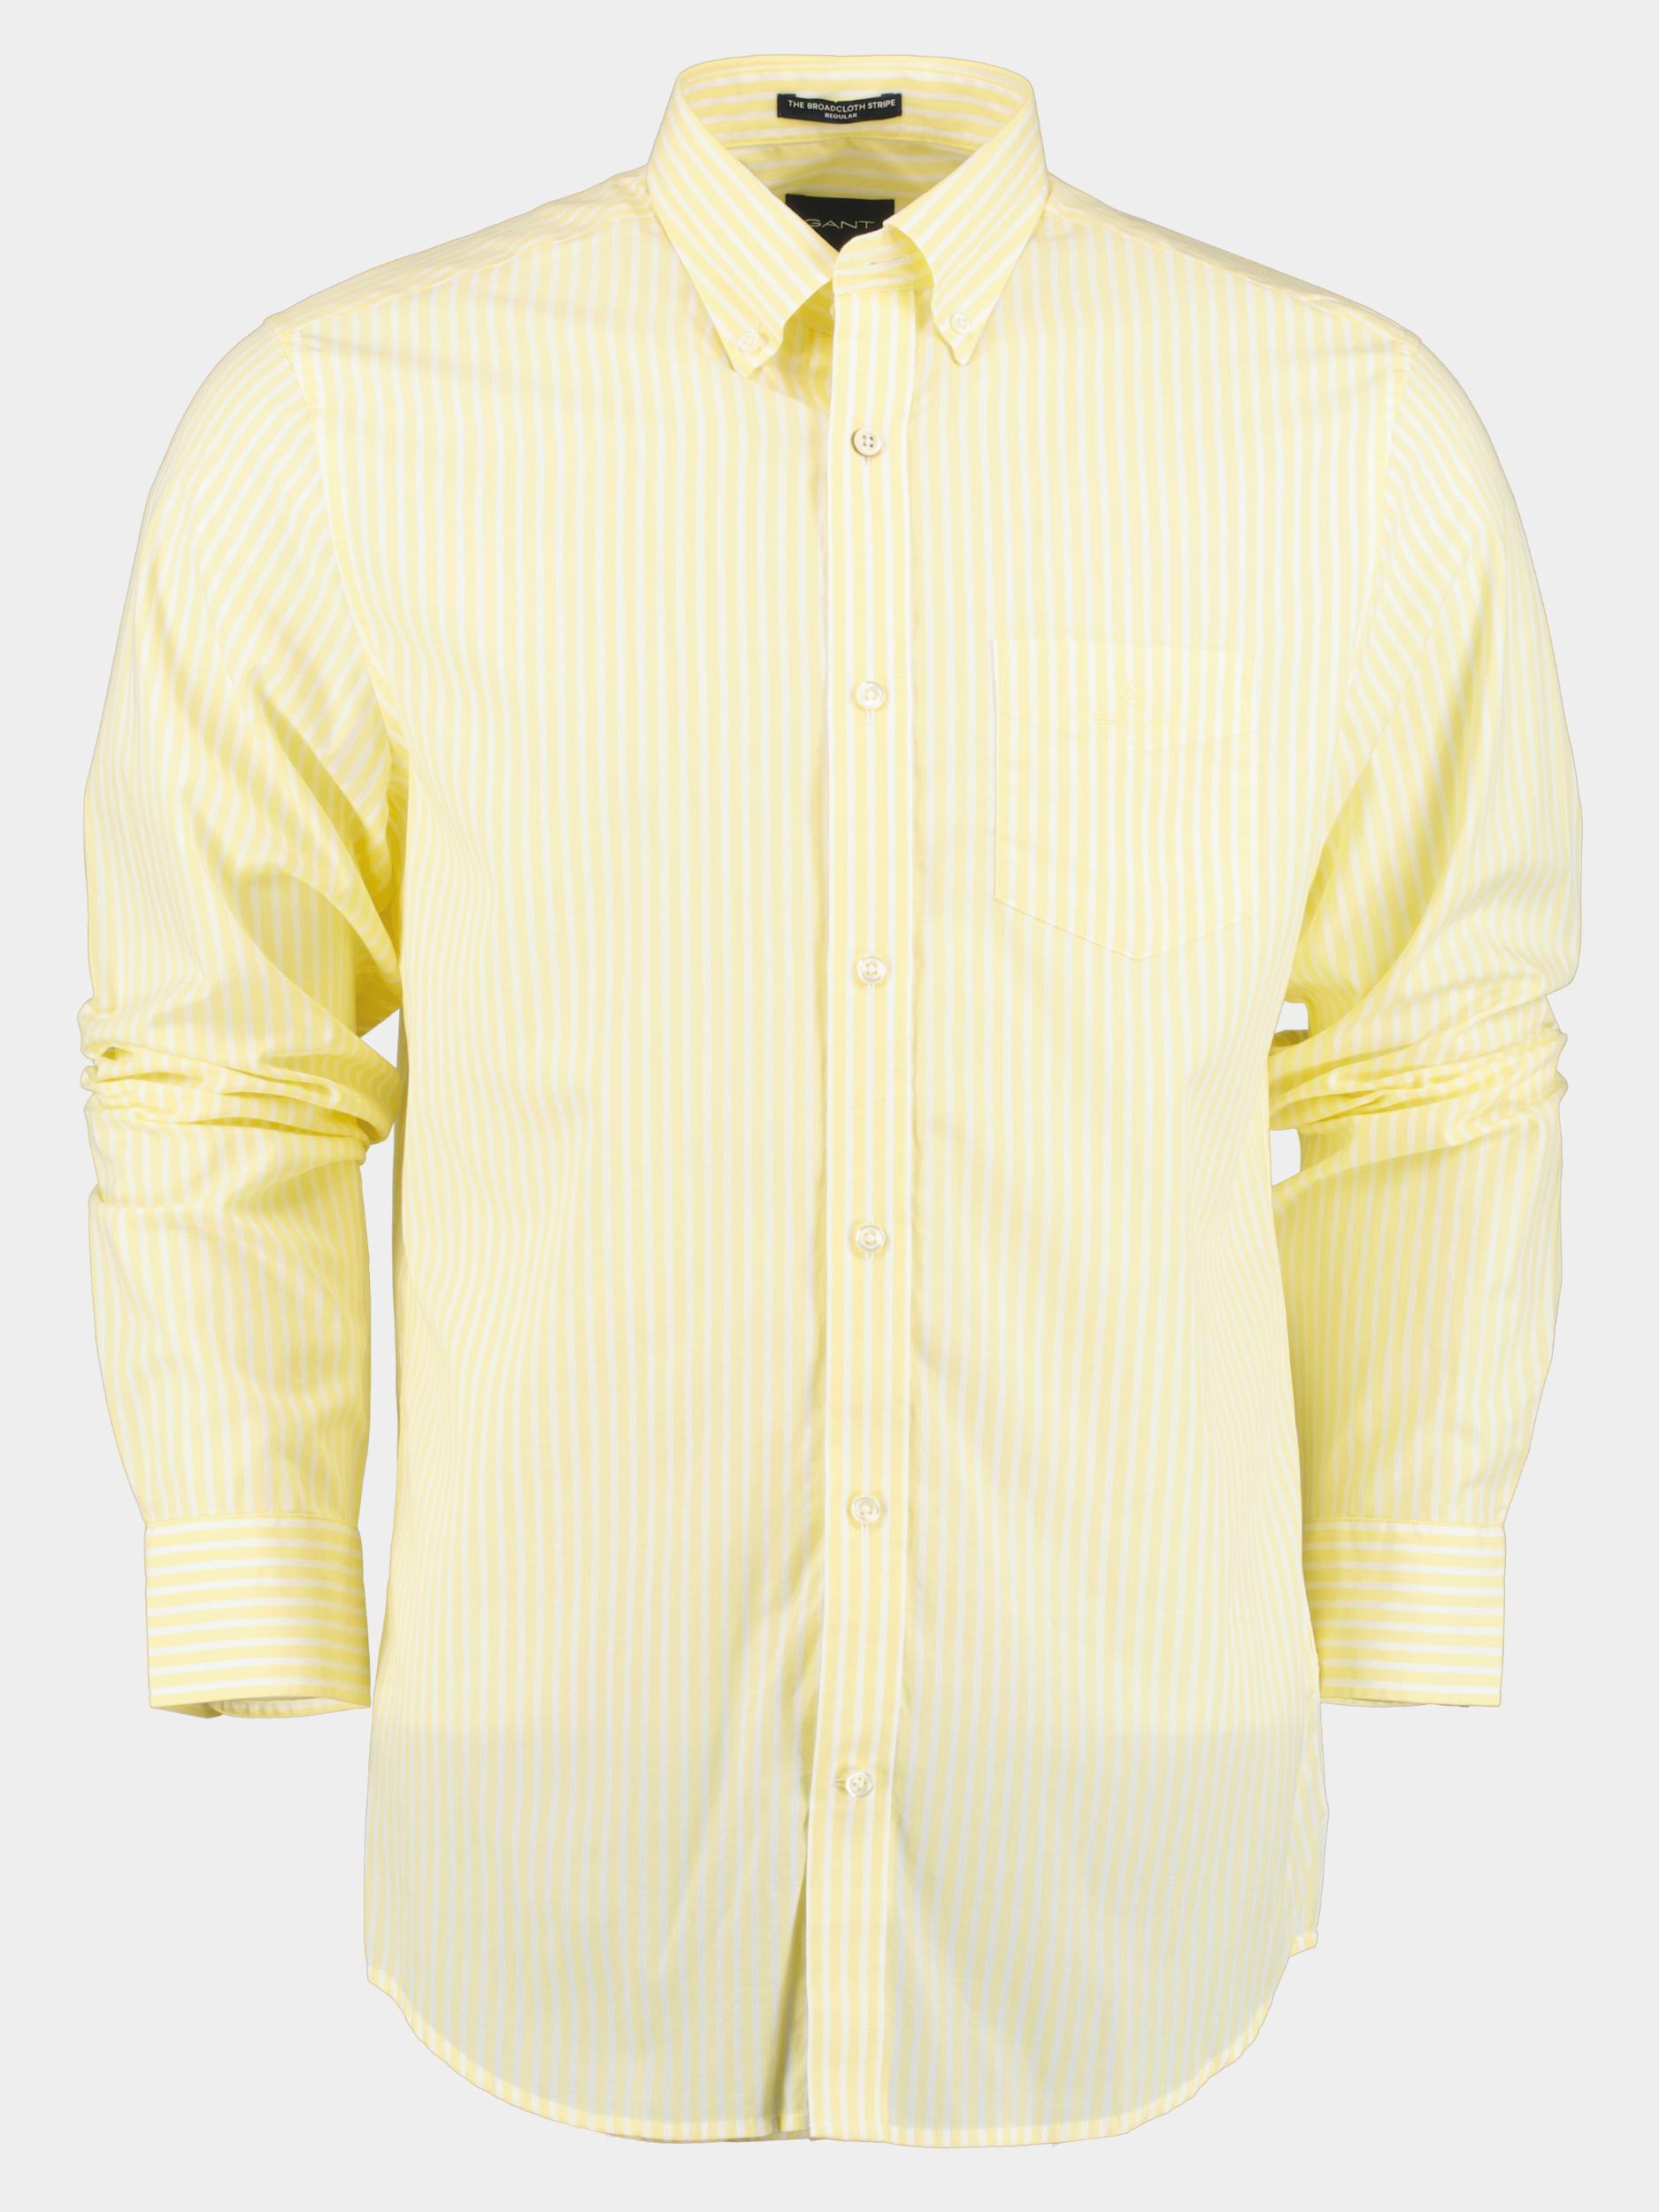 Gant Casual hemd lange mouw Geel Reg Broadcloth Stripe BD 3062000/721